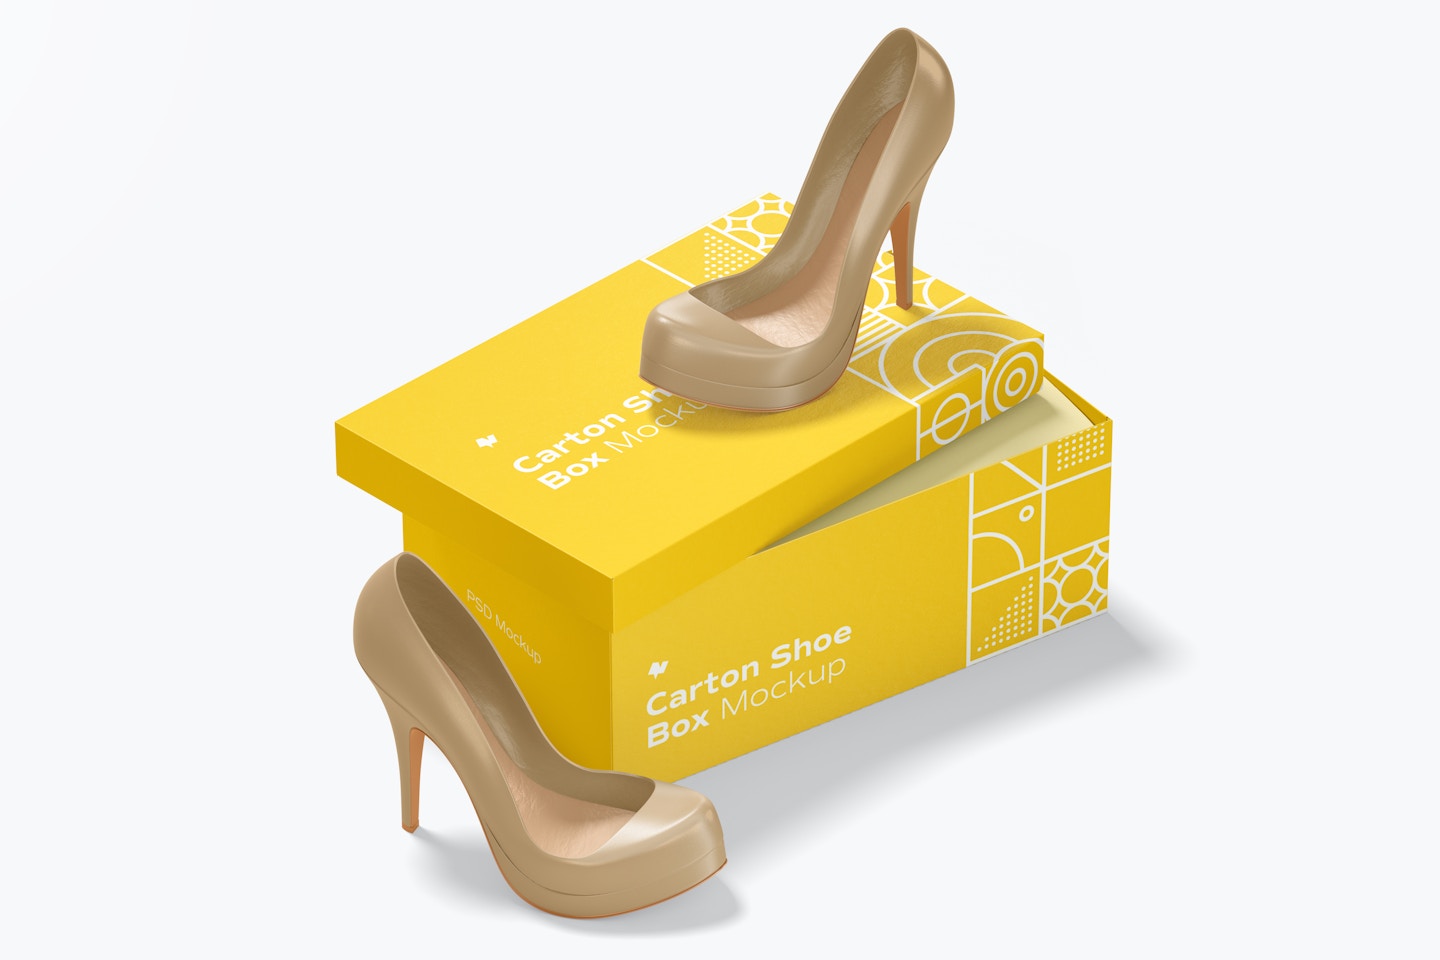 Carton Shoe Box with High Heels Mockup